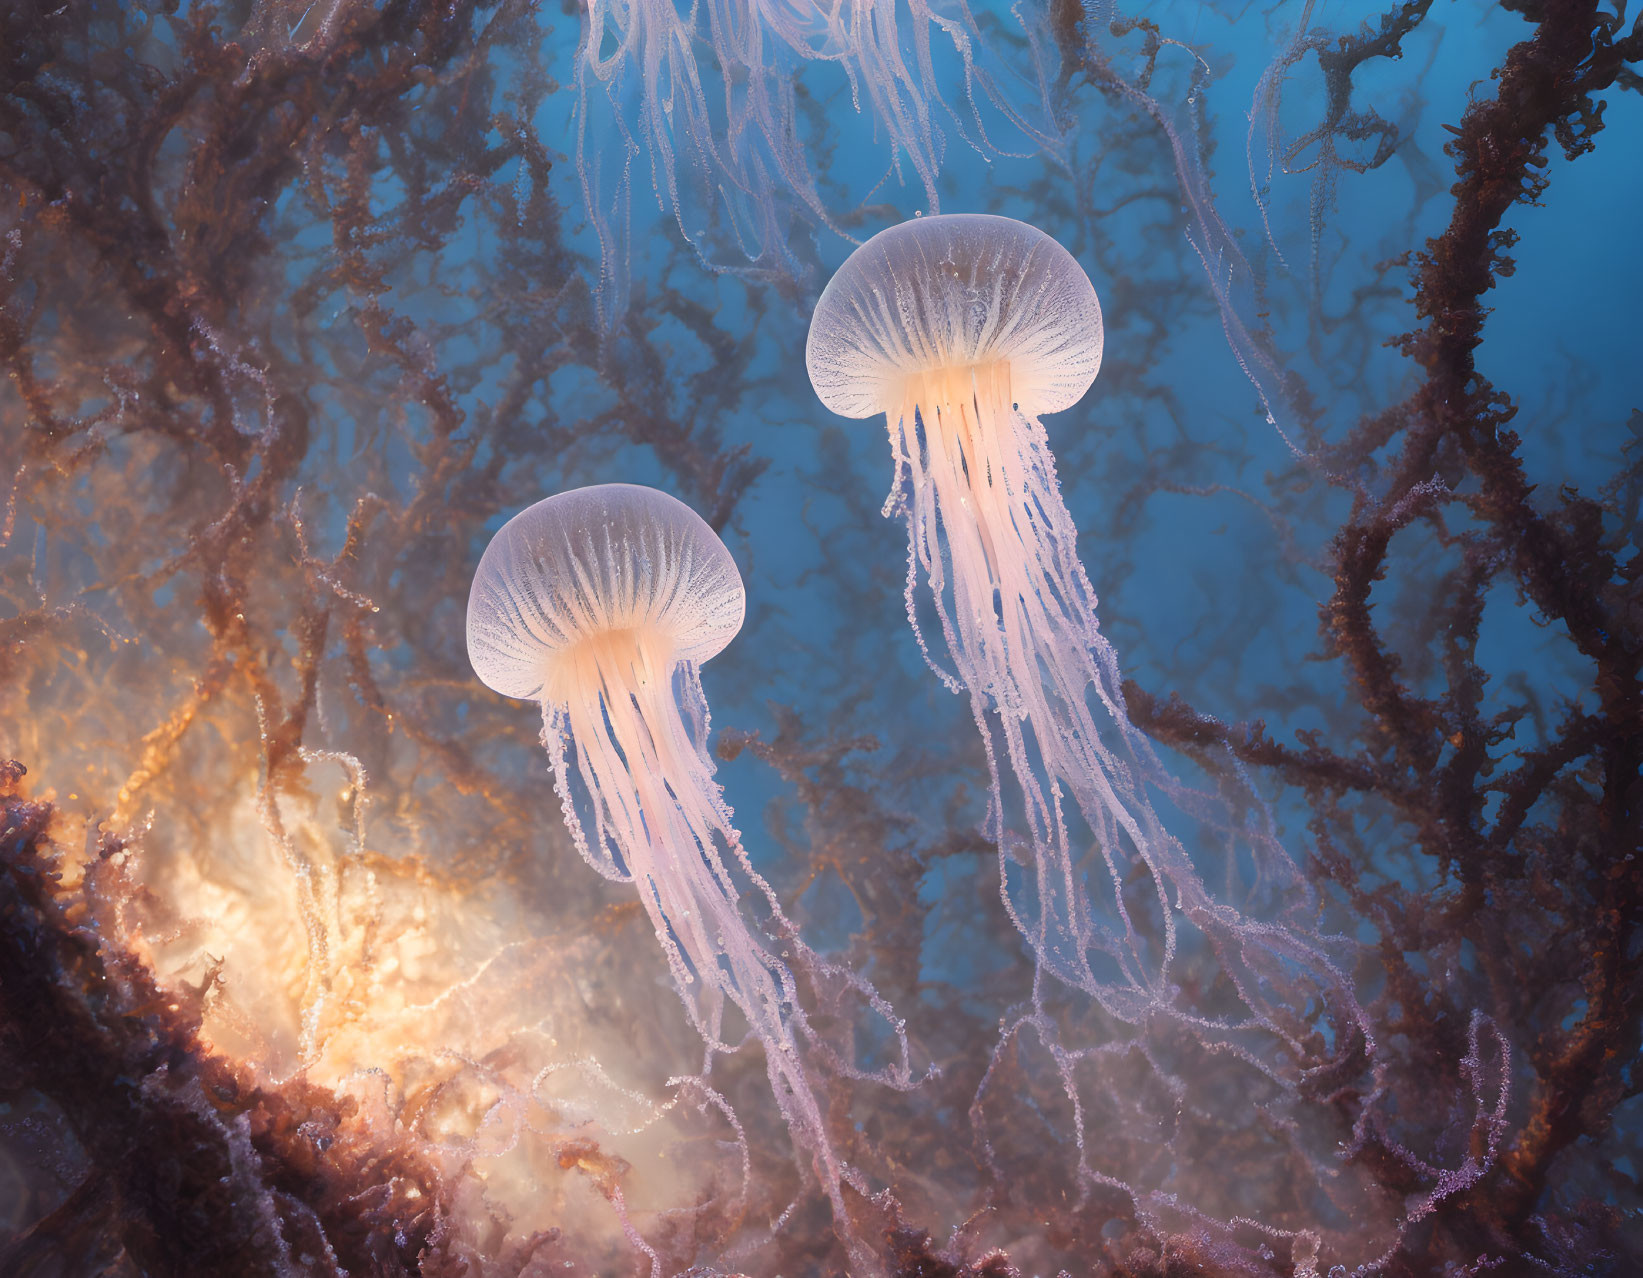 Translucent jellyfish and intricate underwater branches in serene marine scene